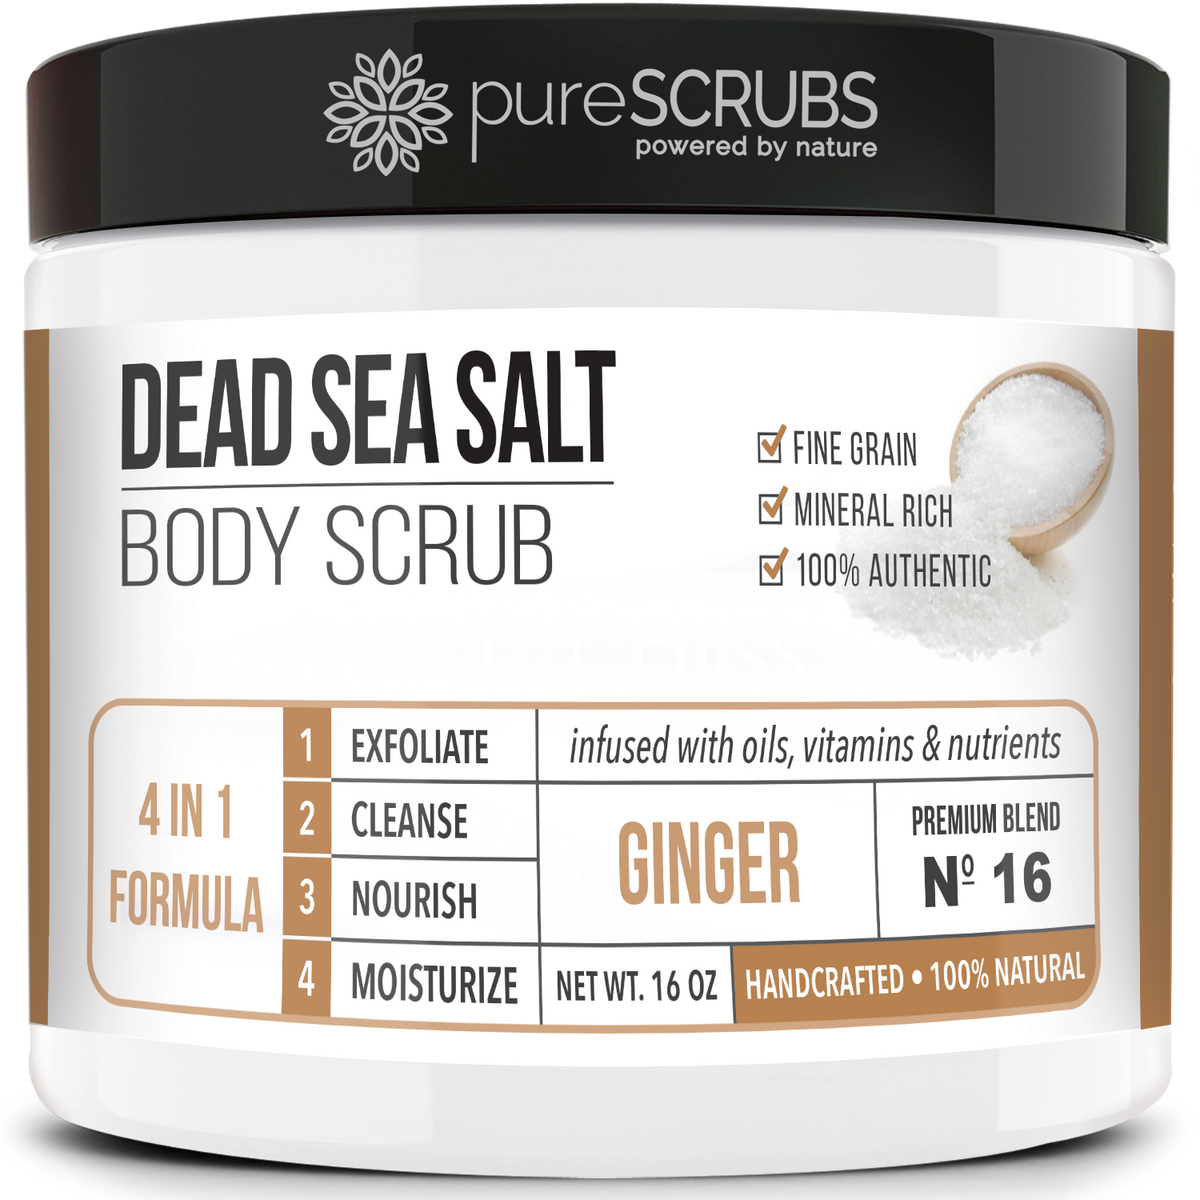 Ginger Body Scrub / Dead Sea Salt / Premium Blend #16